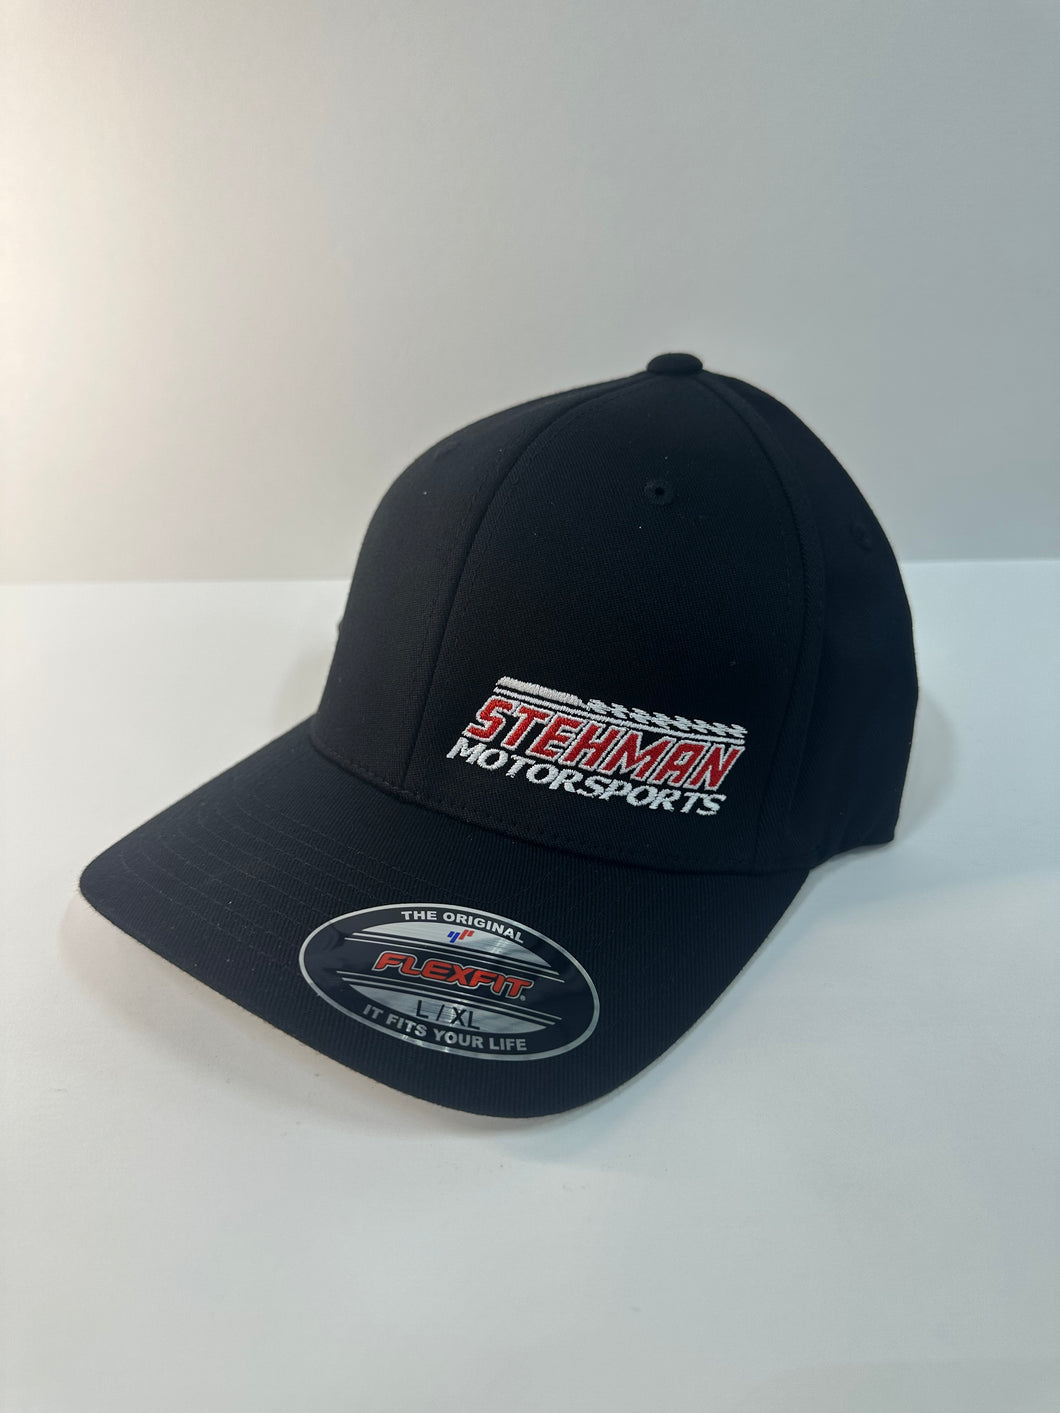 Stehman Motorsports Flex Fit Hat